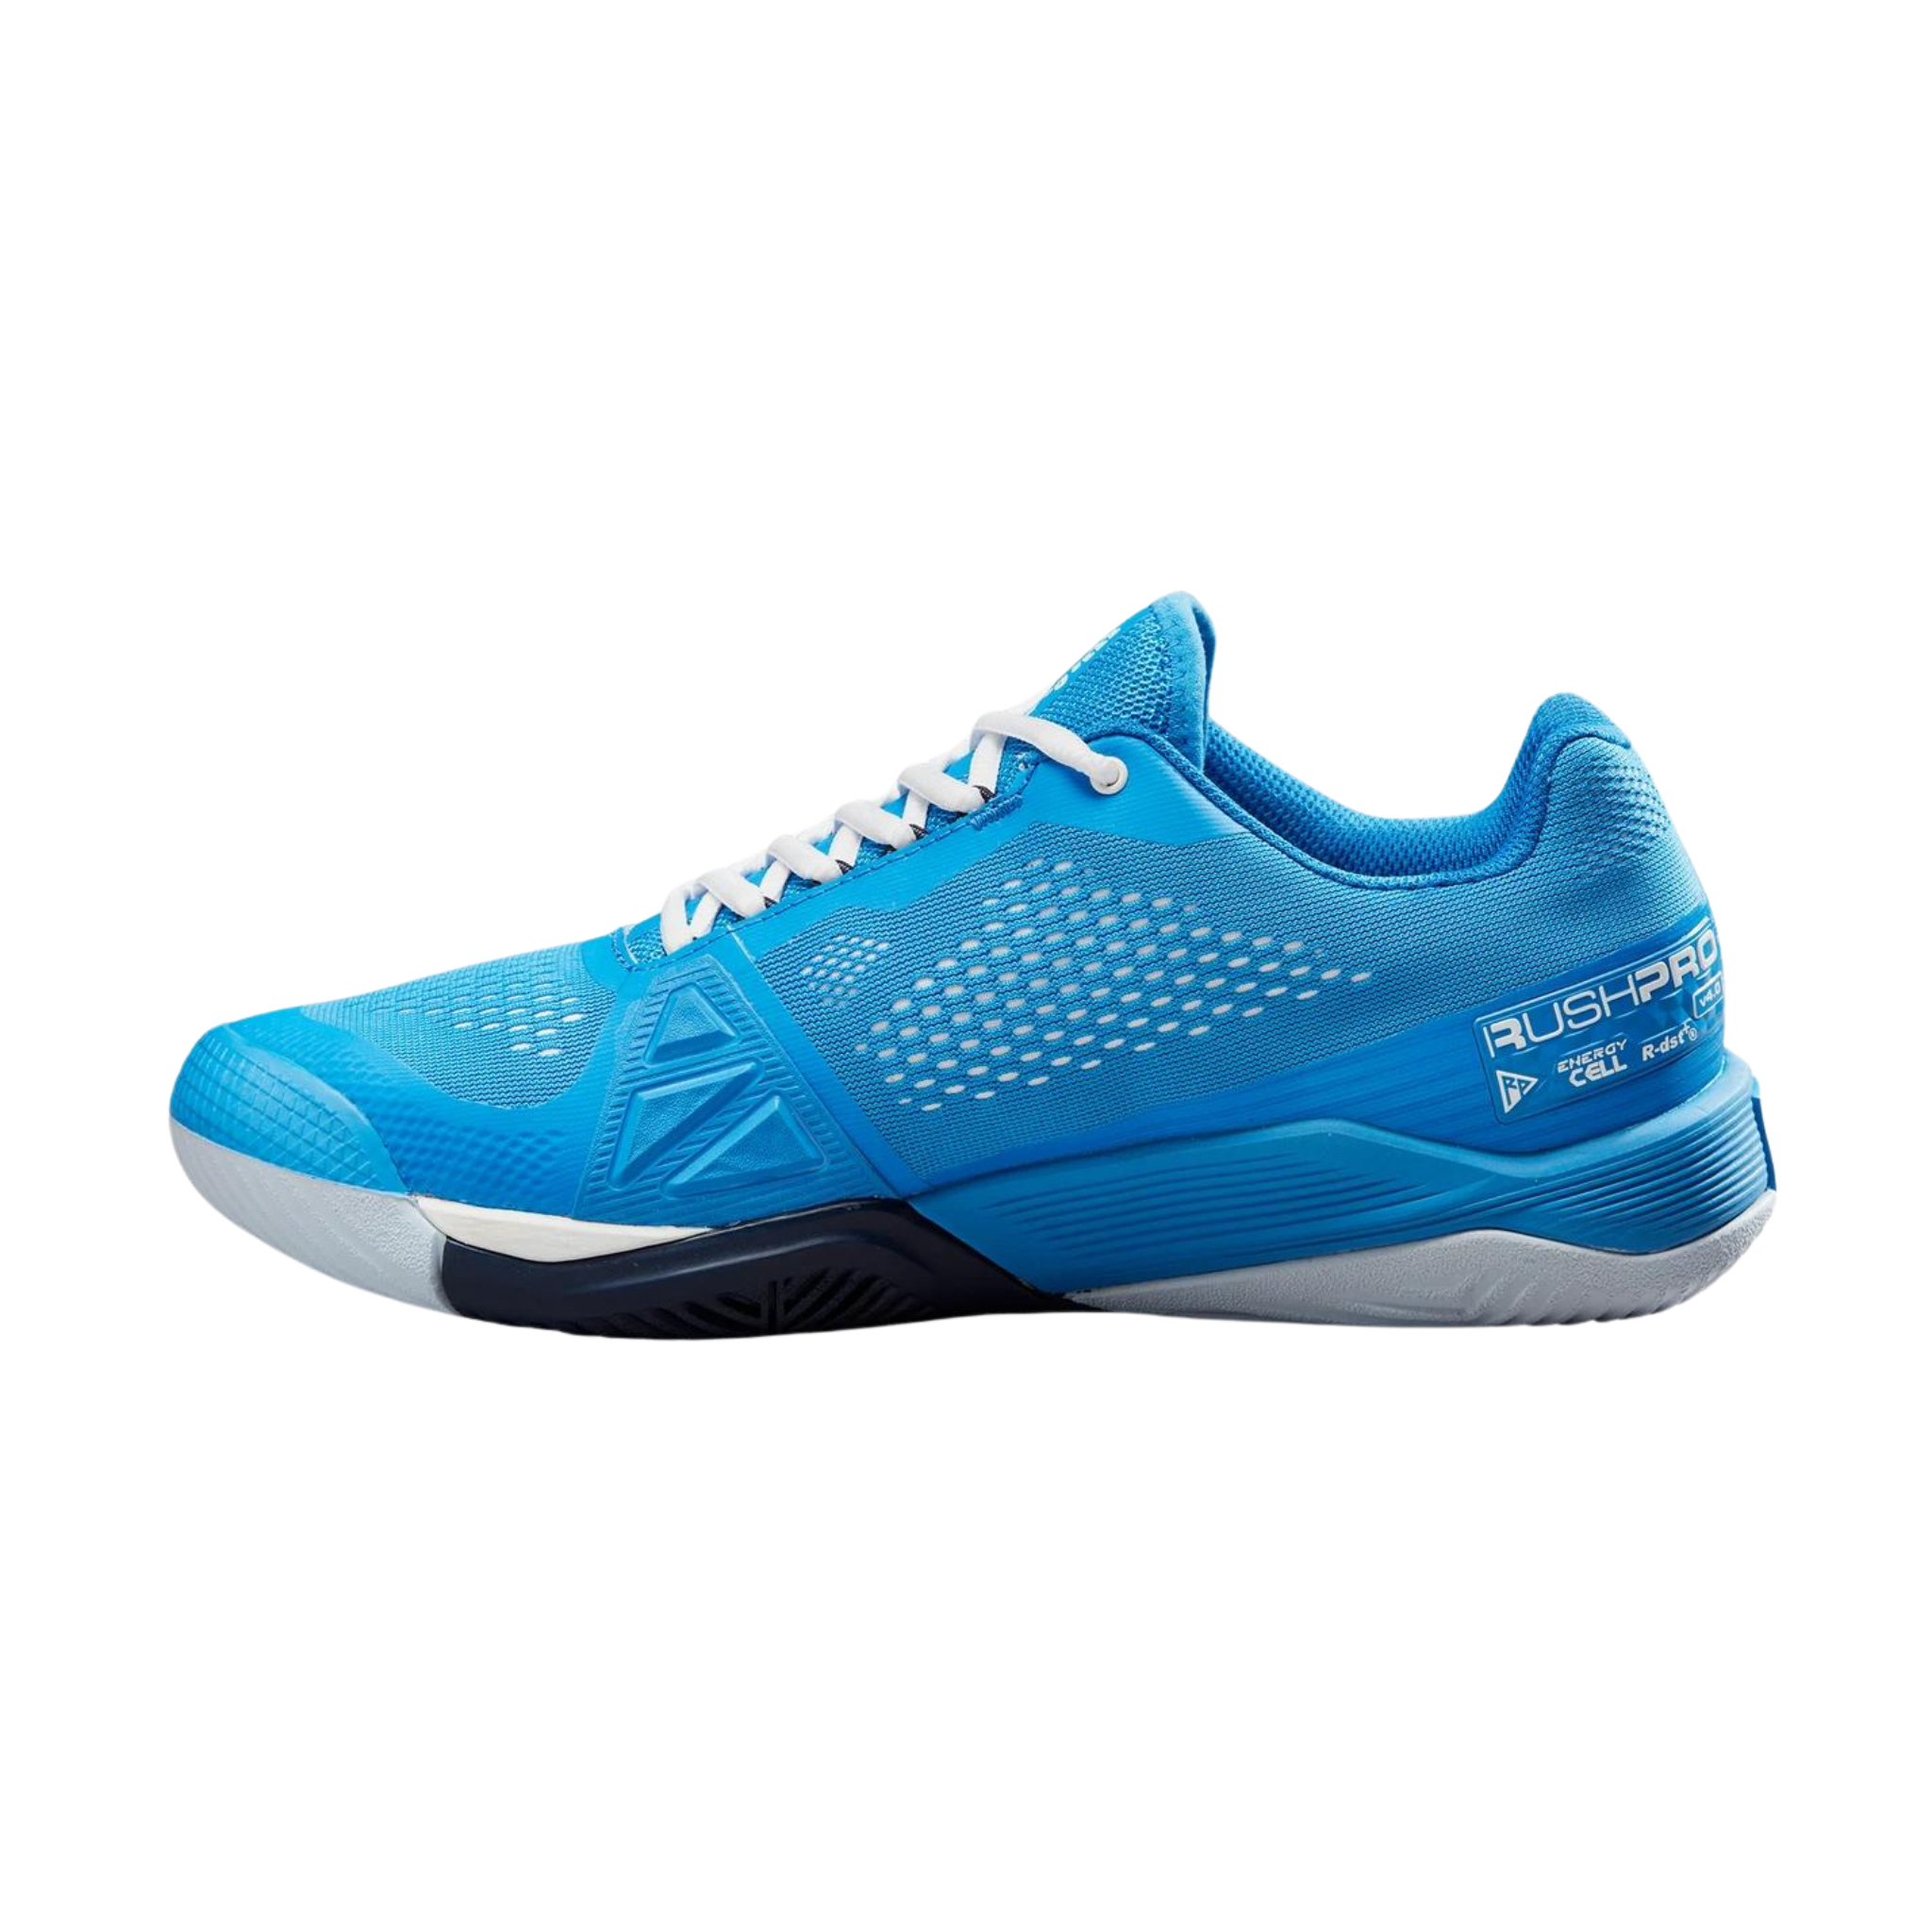 Wilson Rush Pro 4.0 Men's tennis shoes > French Blue/White